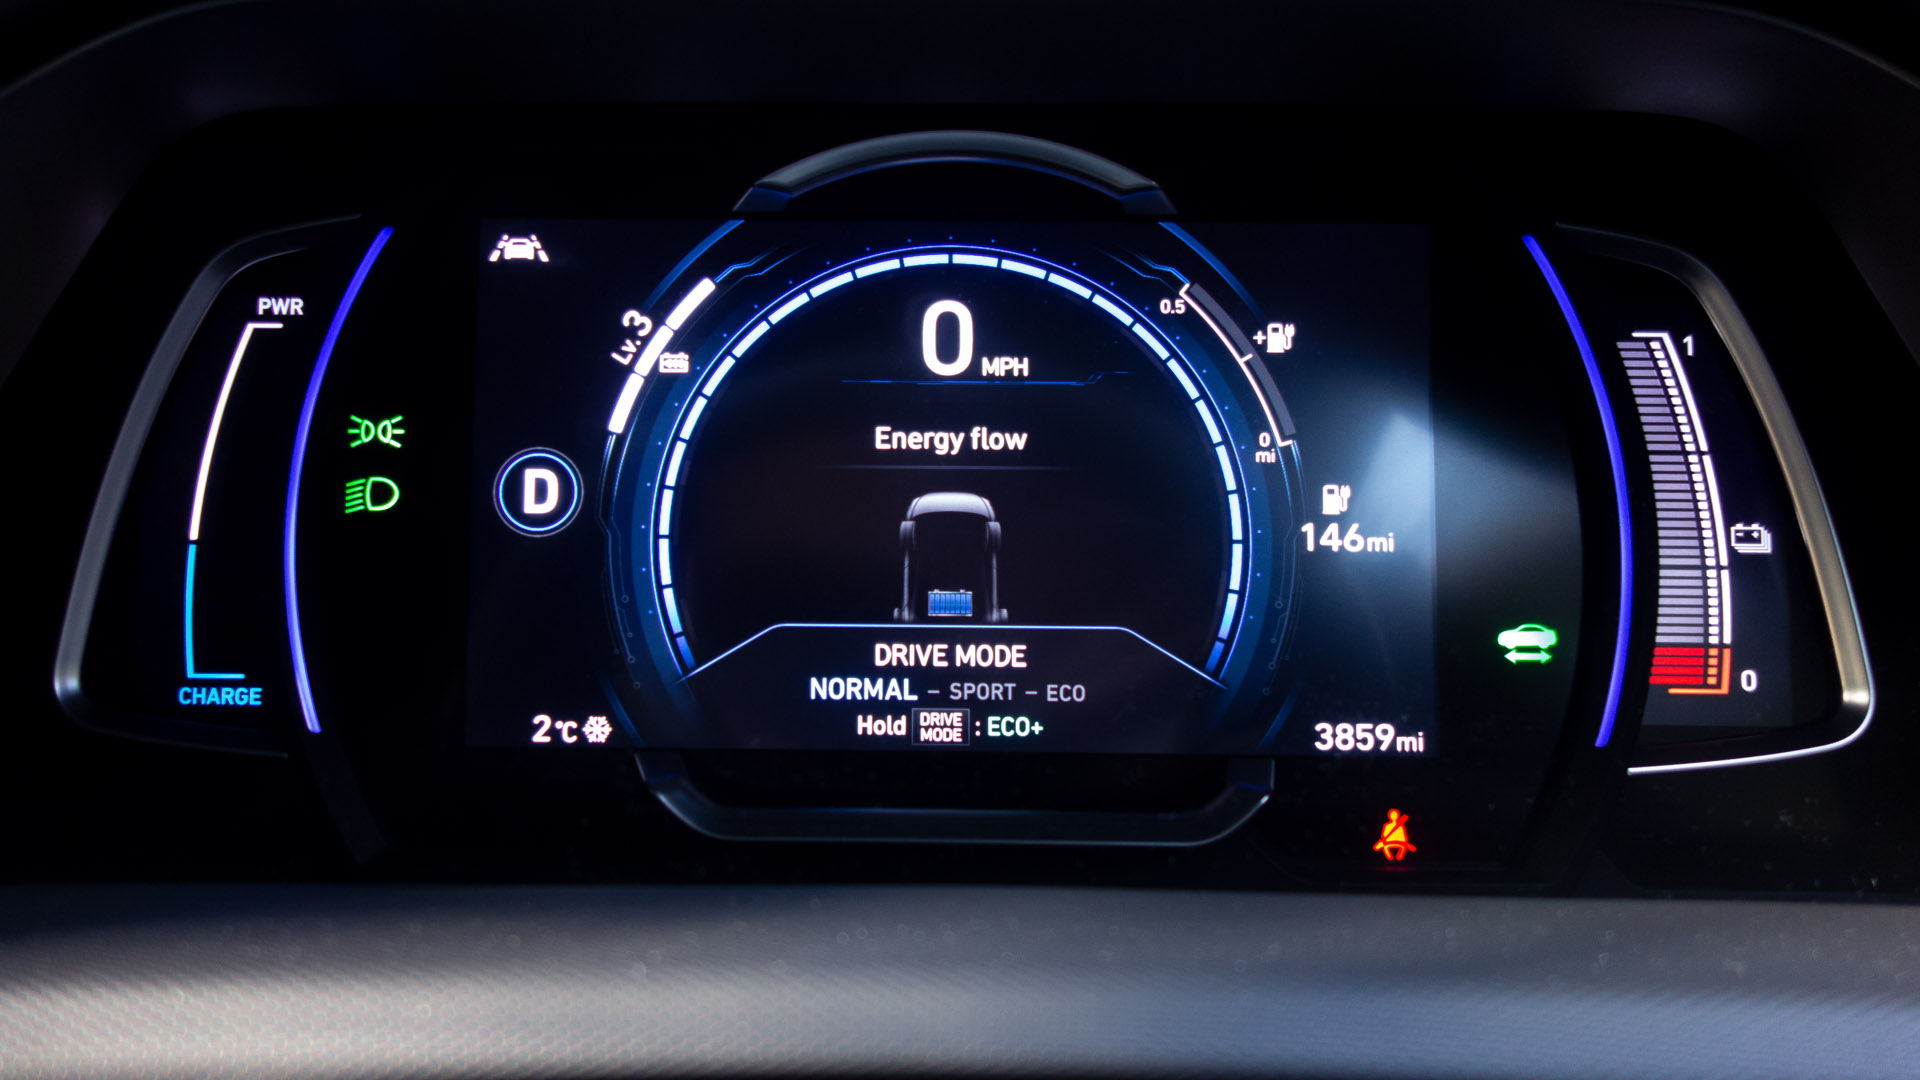 Hyundai Ioniq Electric review: Better than the Nissan Leaf